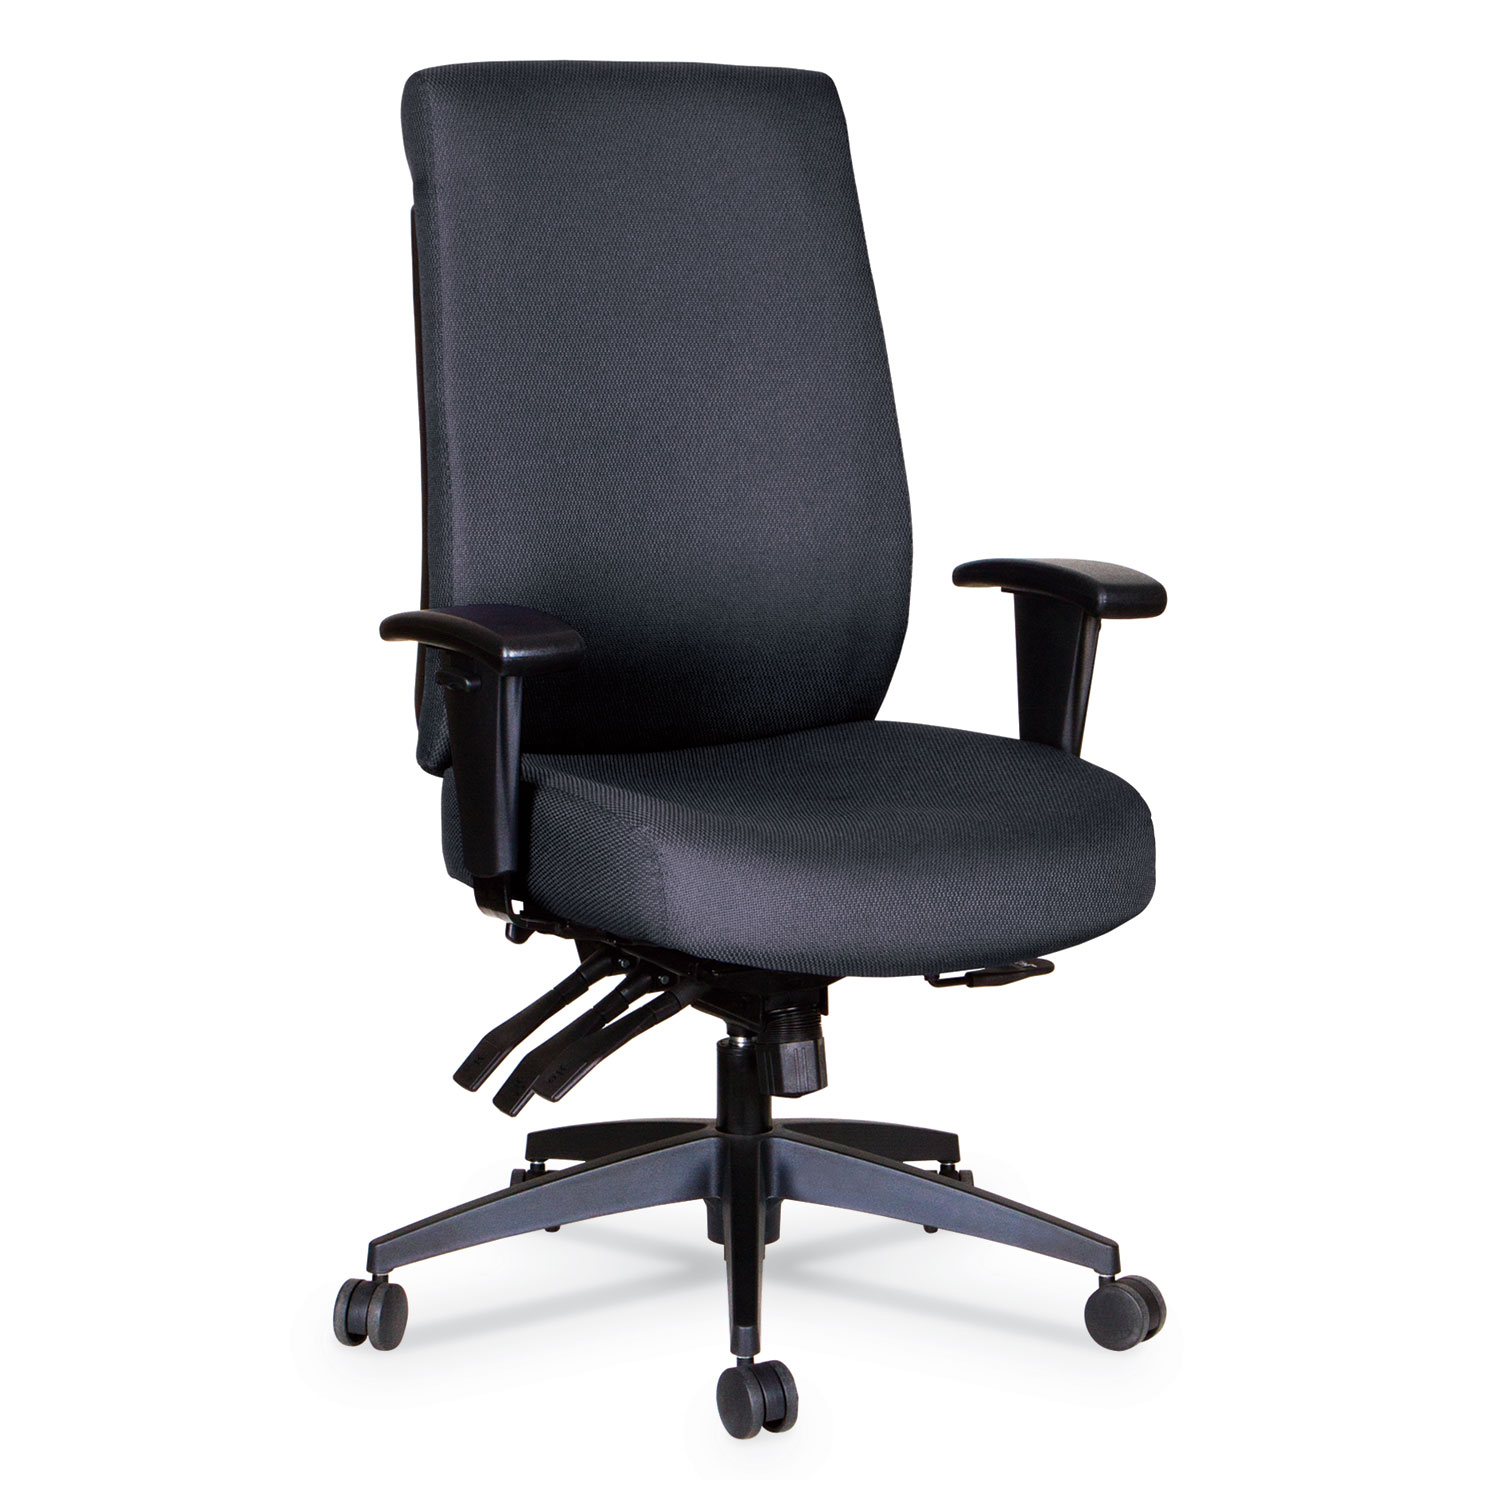  Alera ALEHPM4101 Alera Wrigley Series High Performance High-Back Multifunction Task Chair, Up to 275 lbs., Black Seat/Back, Black Base (ALEHPM4101) 